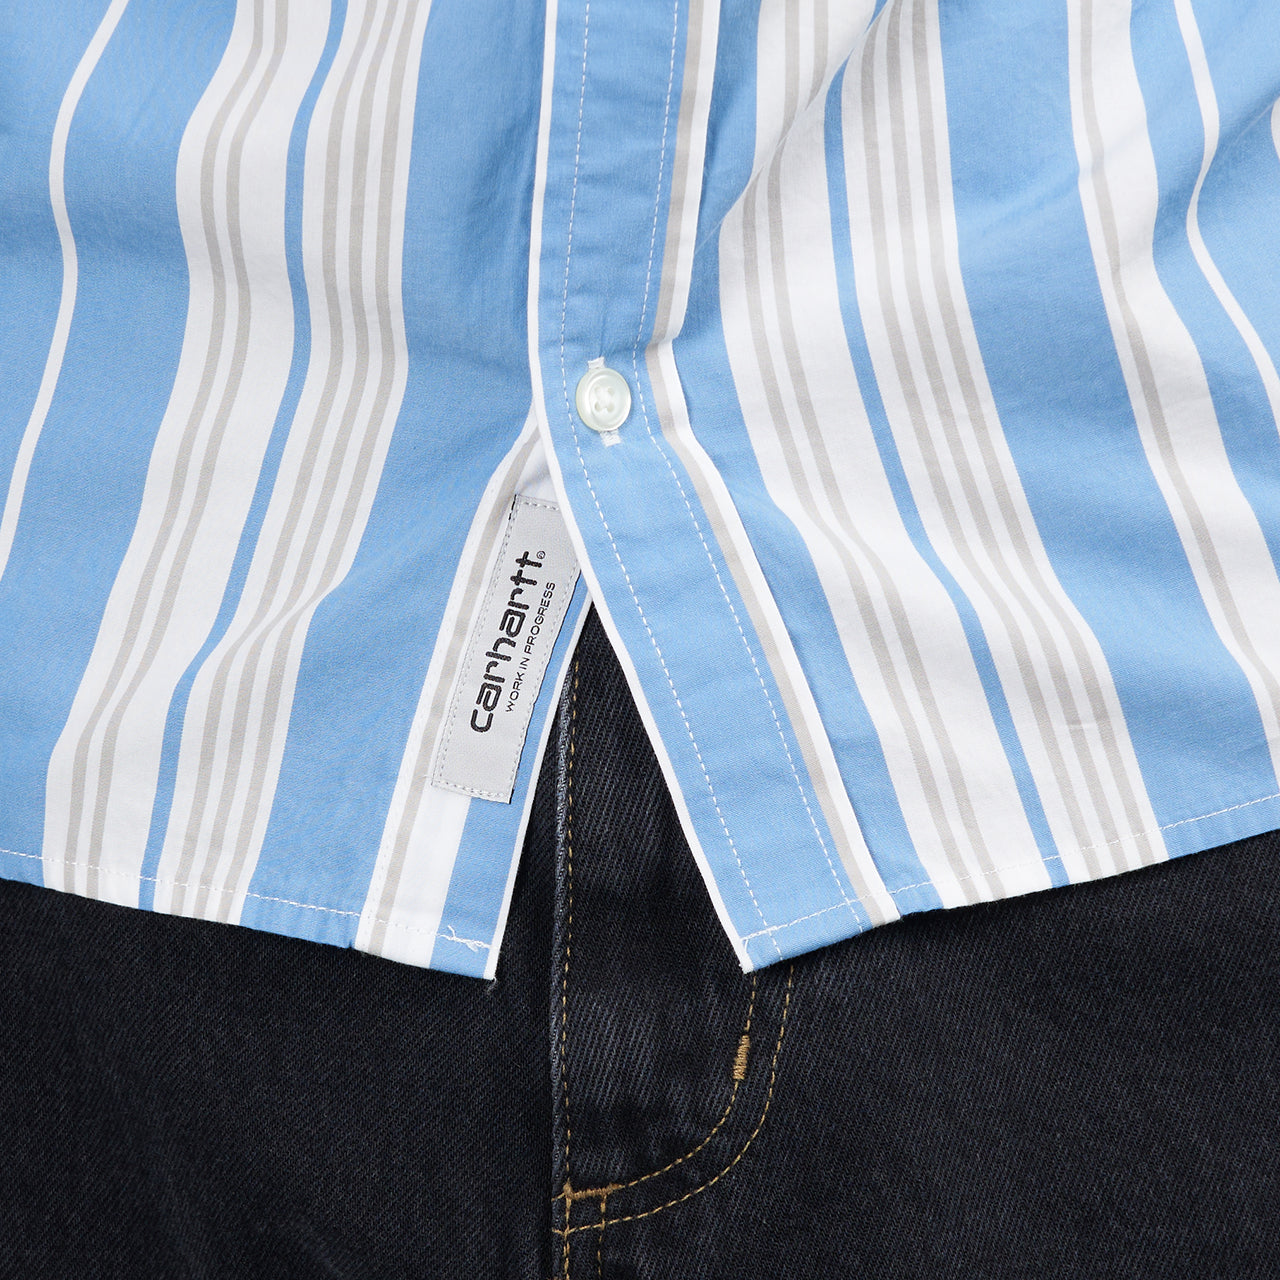 Carhartt WIP L/S Romero Shirt (Blau / Weiß)  - Allike Store